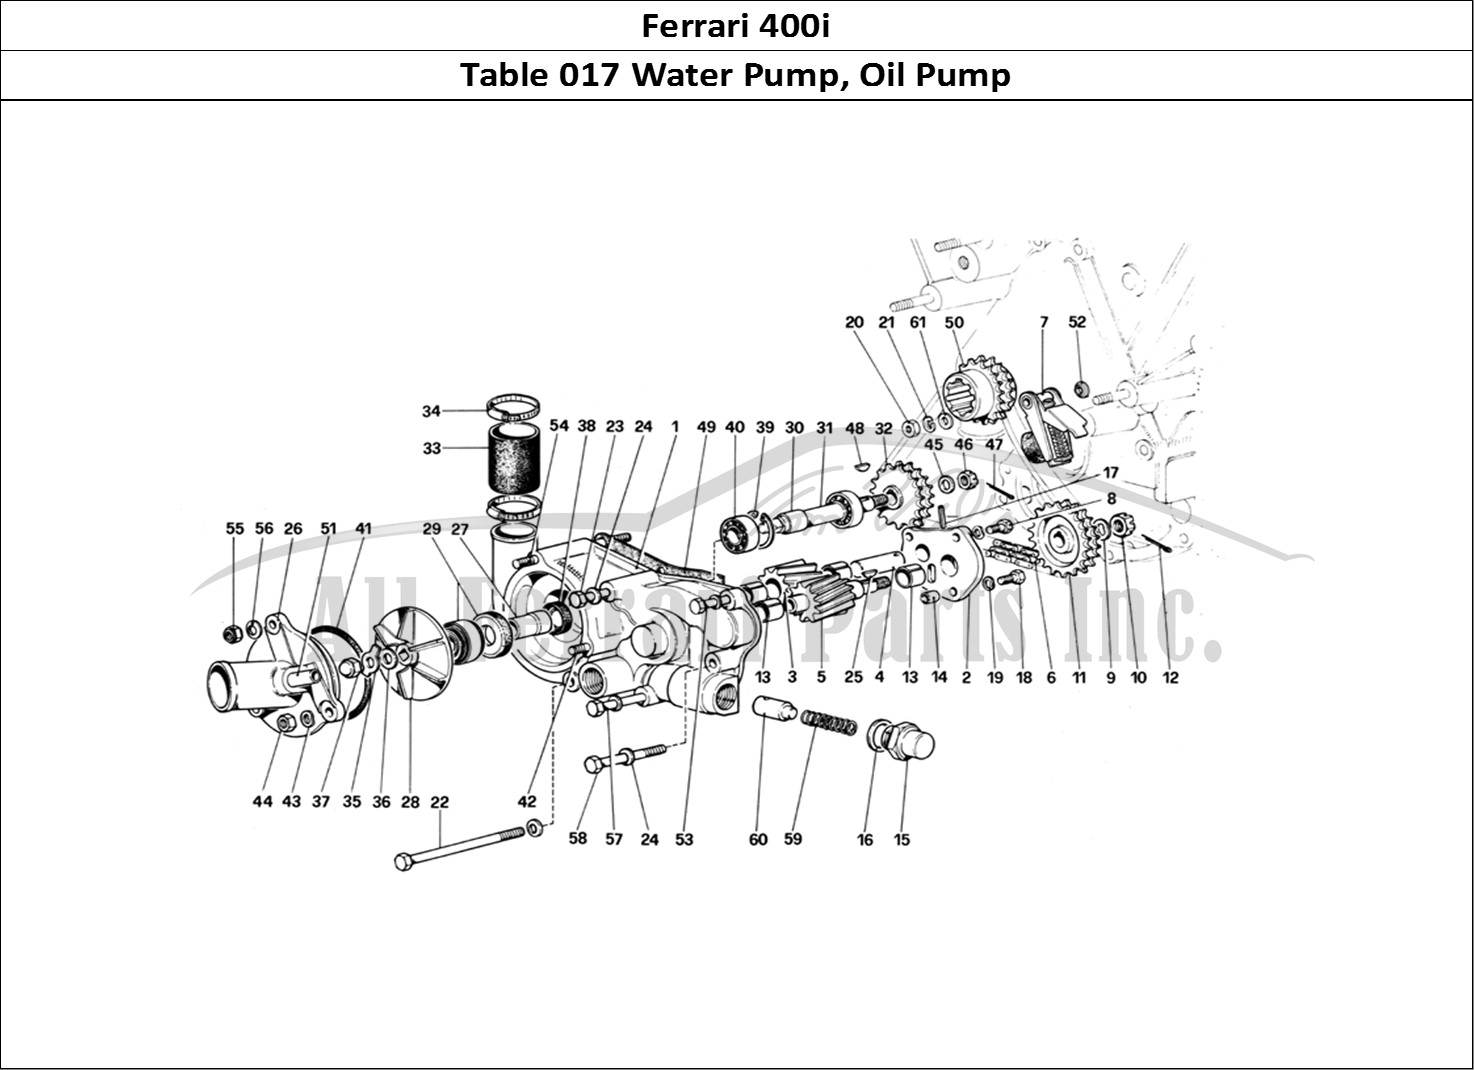 Ferrari Parts Ferrari 400i (1983 Mechanical) Page 017 Water Pump and Engine Oil